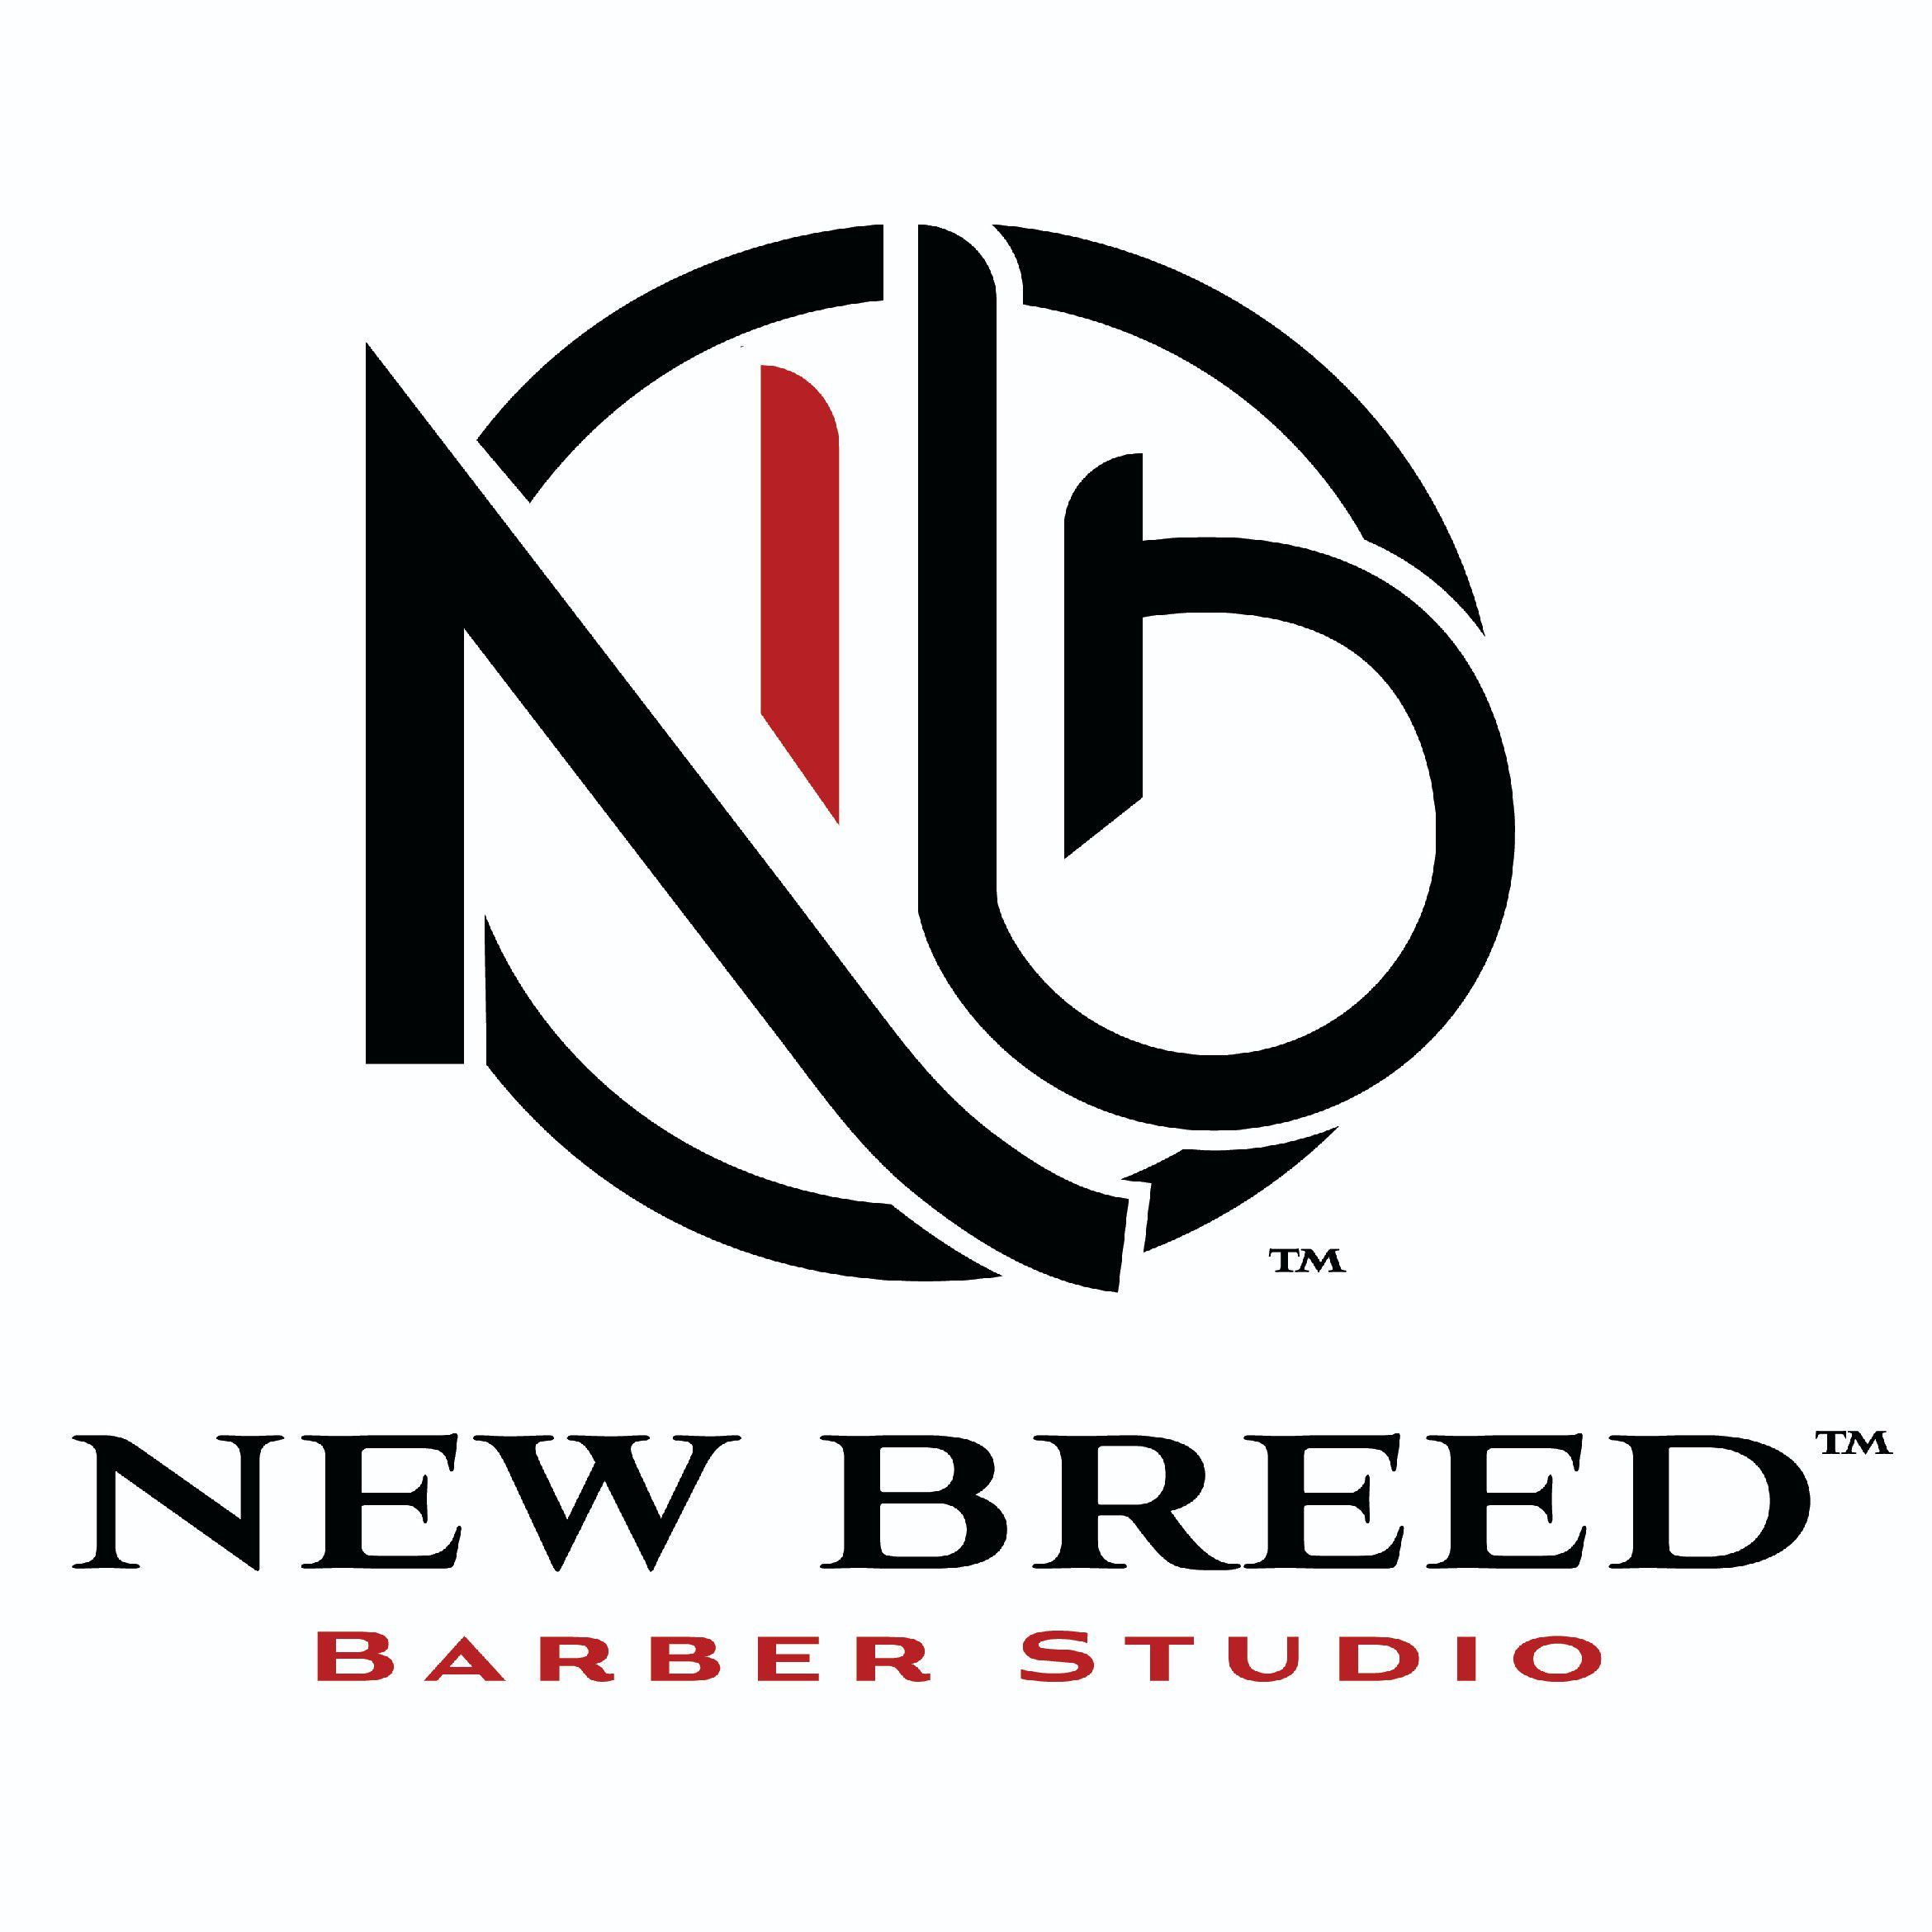 New Breed Barber Studio, 2831 WENDELL BLVD, NEXT TO FOODLION, Wendell, 27591